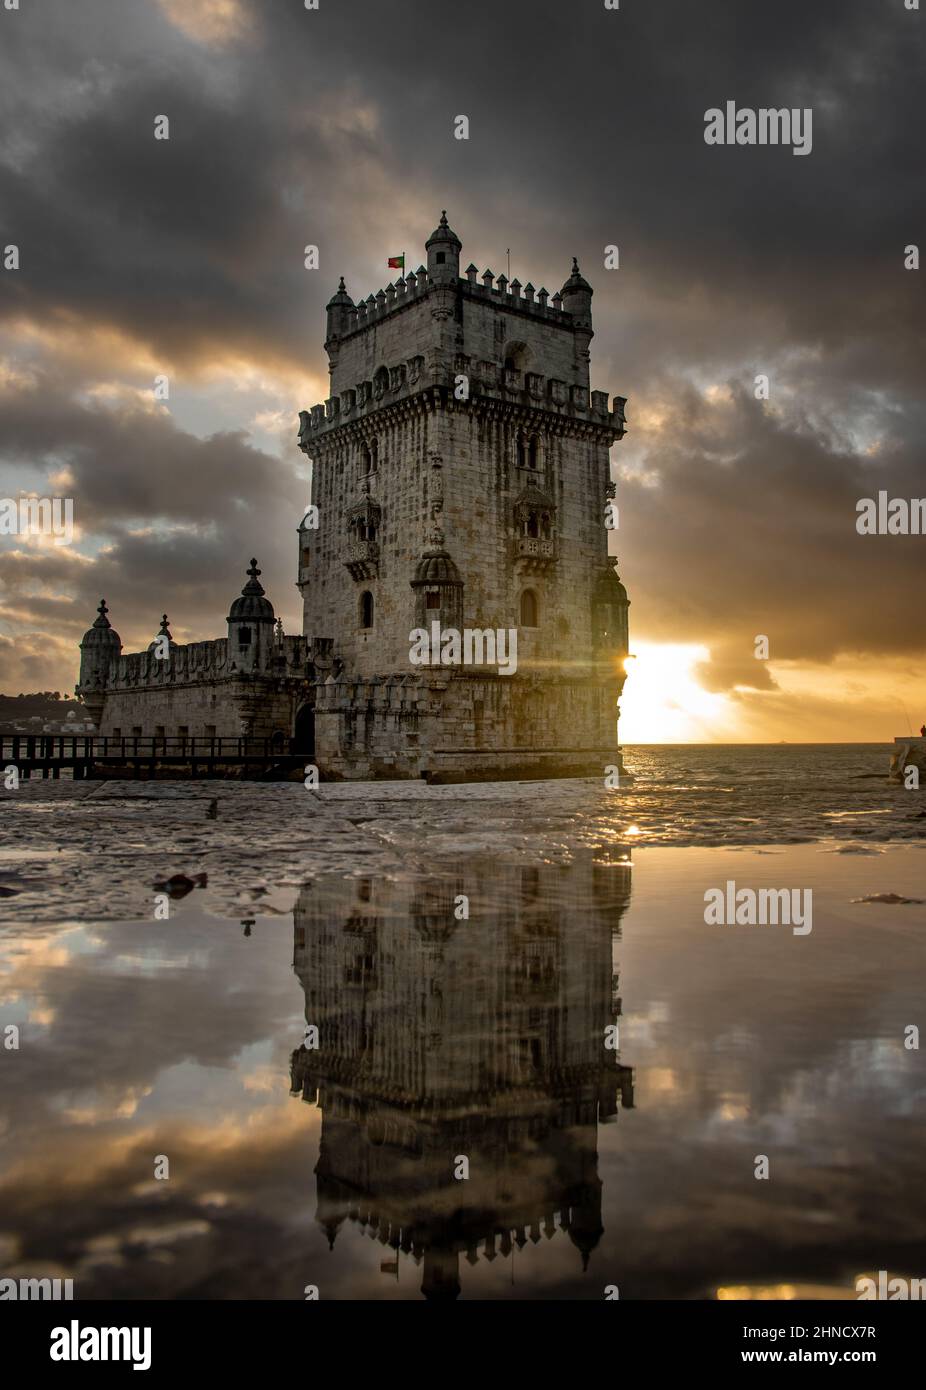 Belem tower, Torre de Belem - historical gothic style tower and former prison in Belem, Lisbon, Portugal Stock Photo